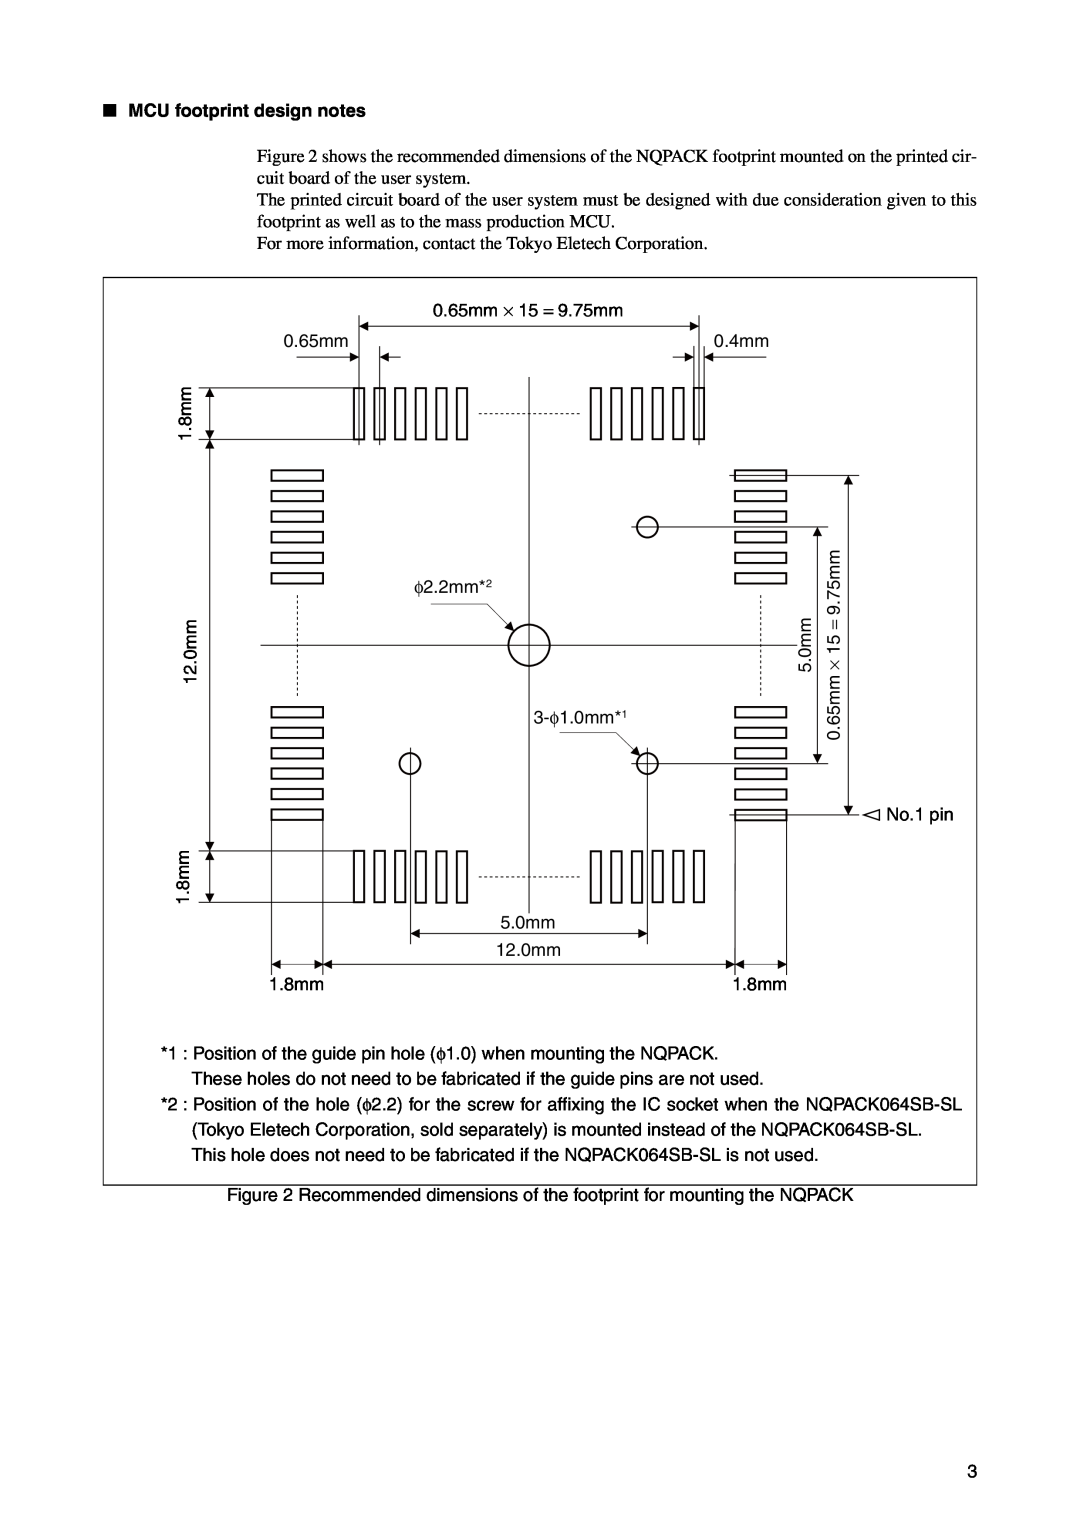 Fujitsu LQFP-64P operation manual MCU footprint design notes 